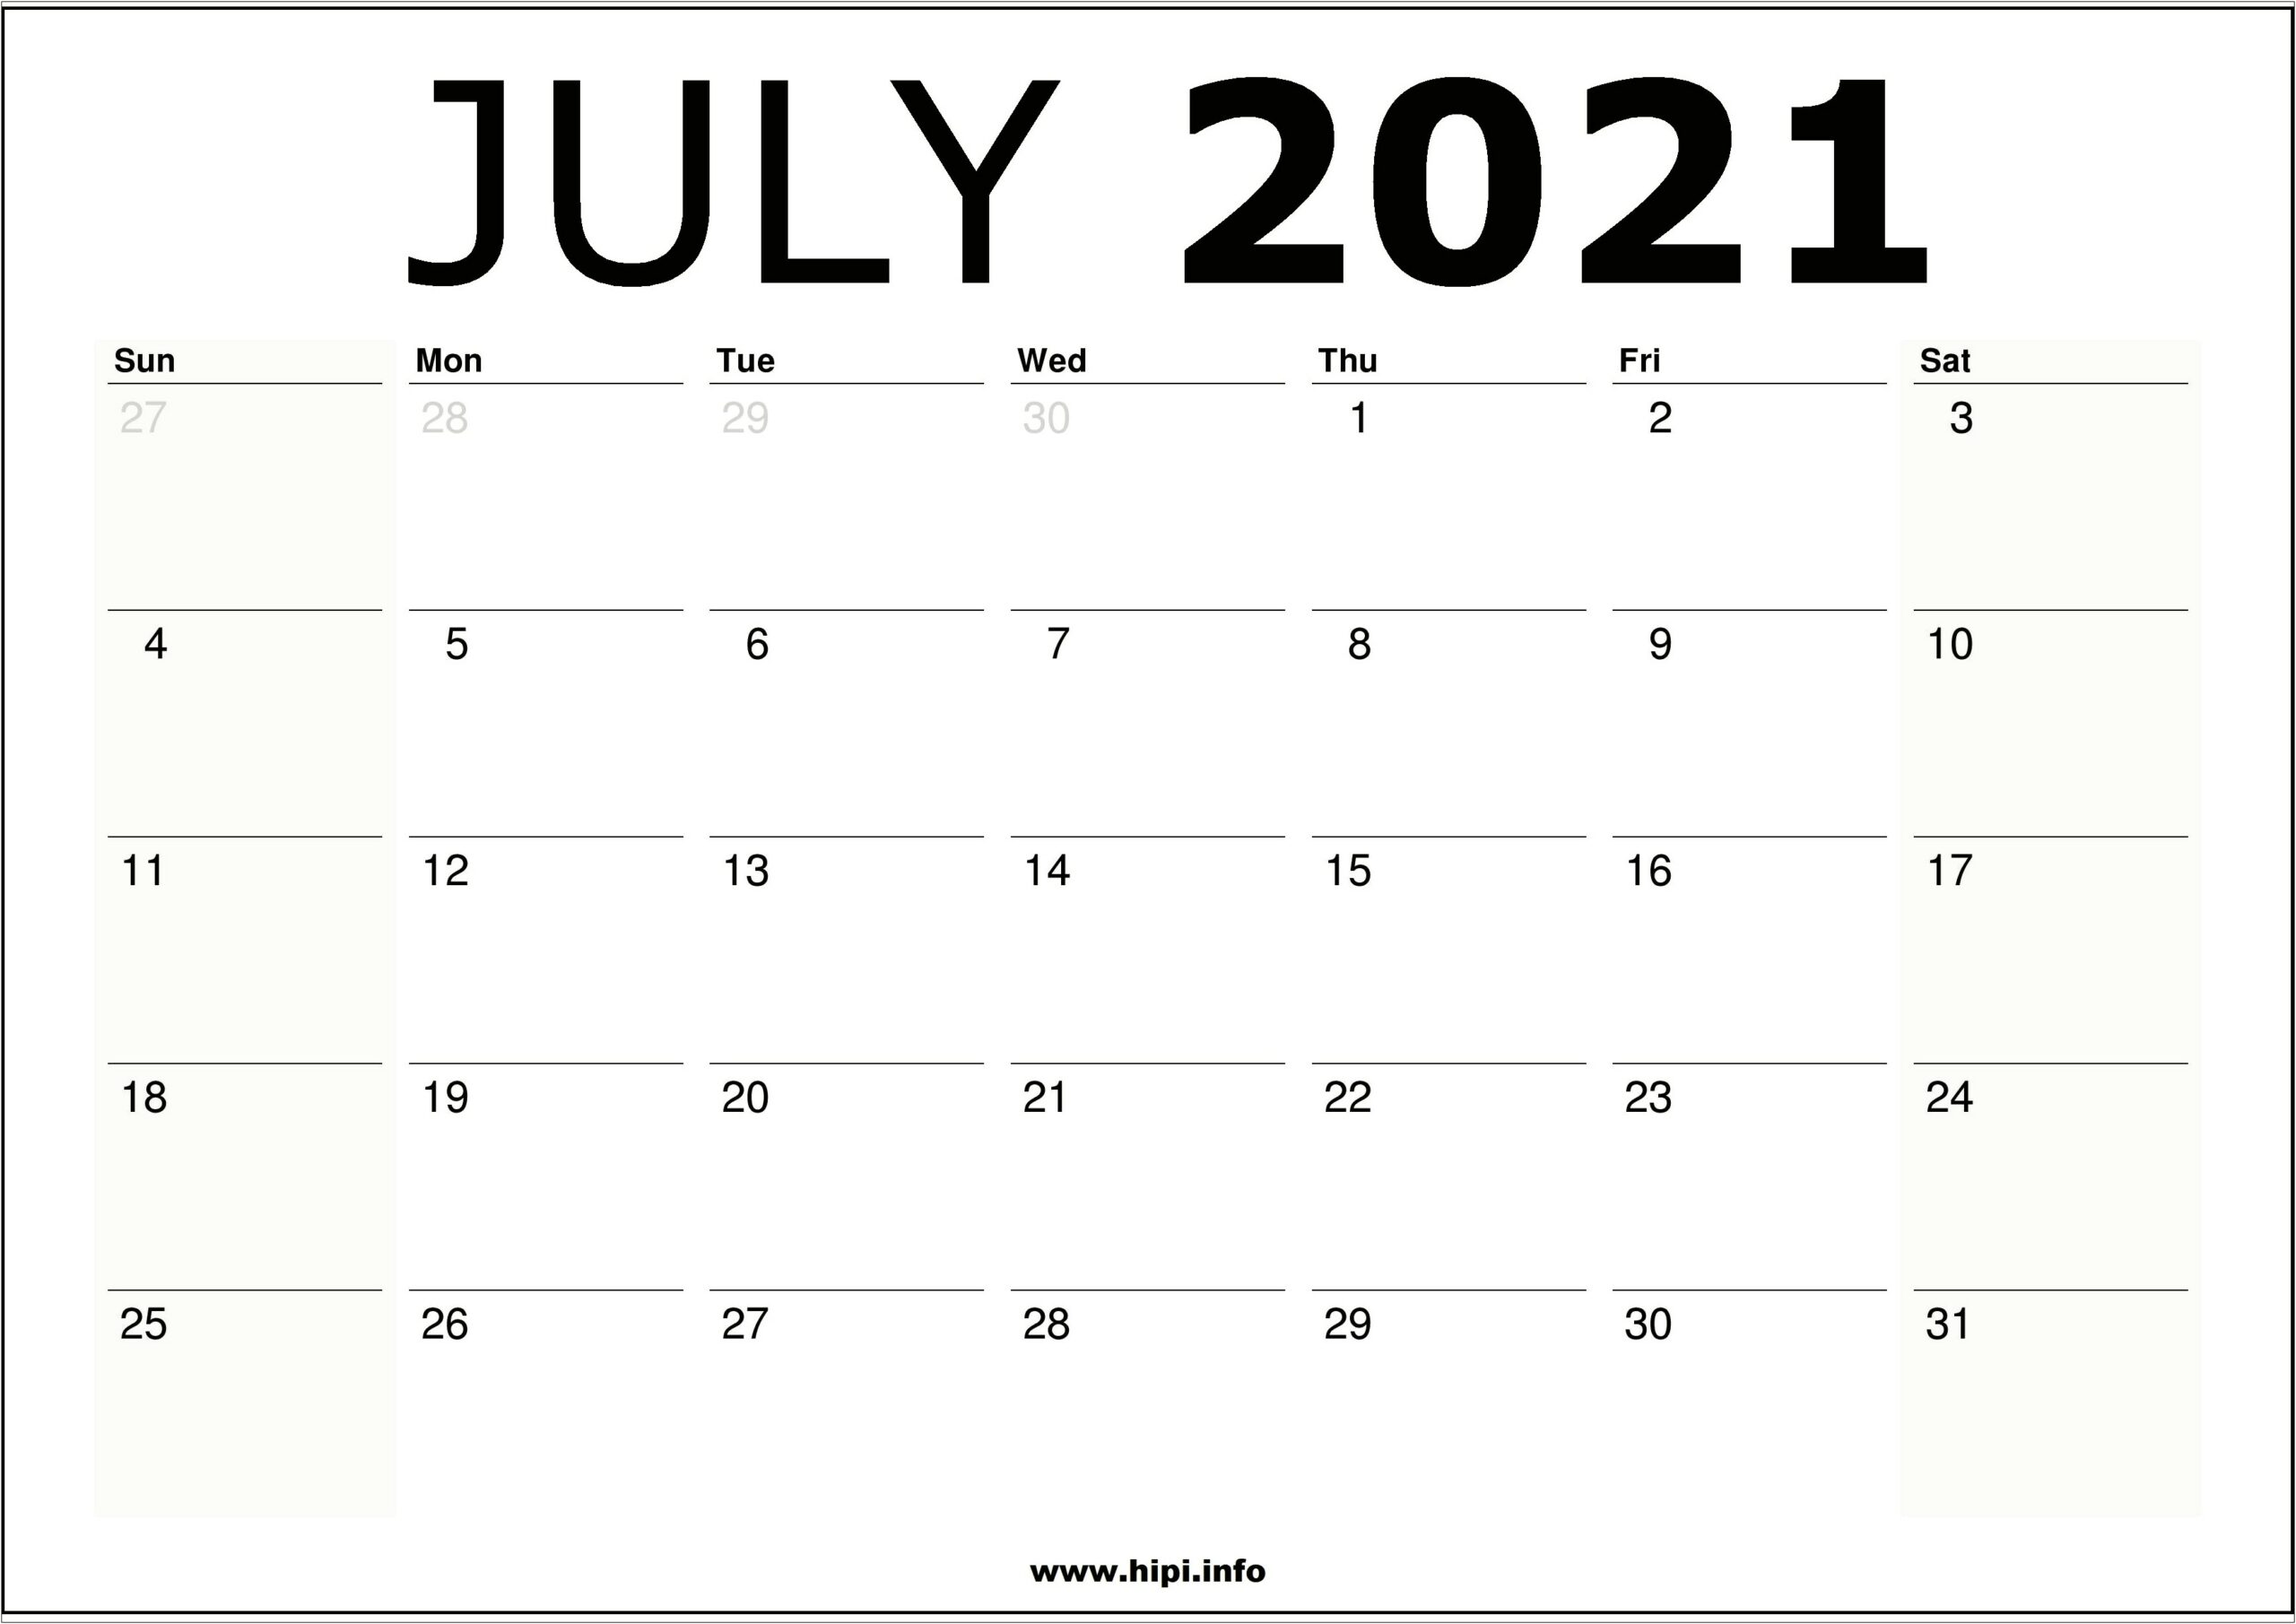 Free July 2020 Calendar Template To Print